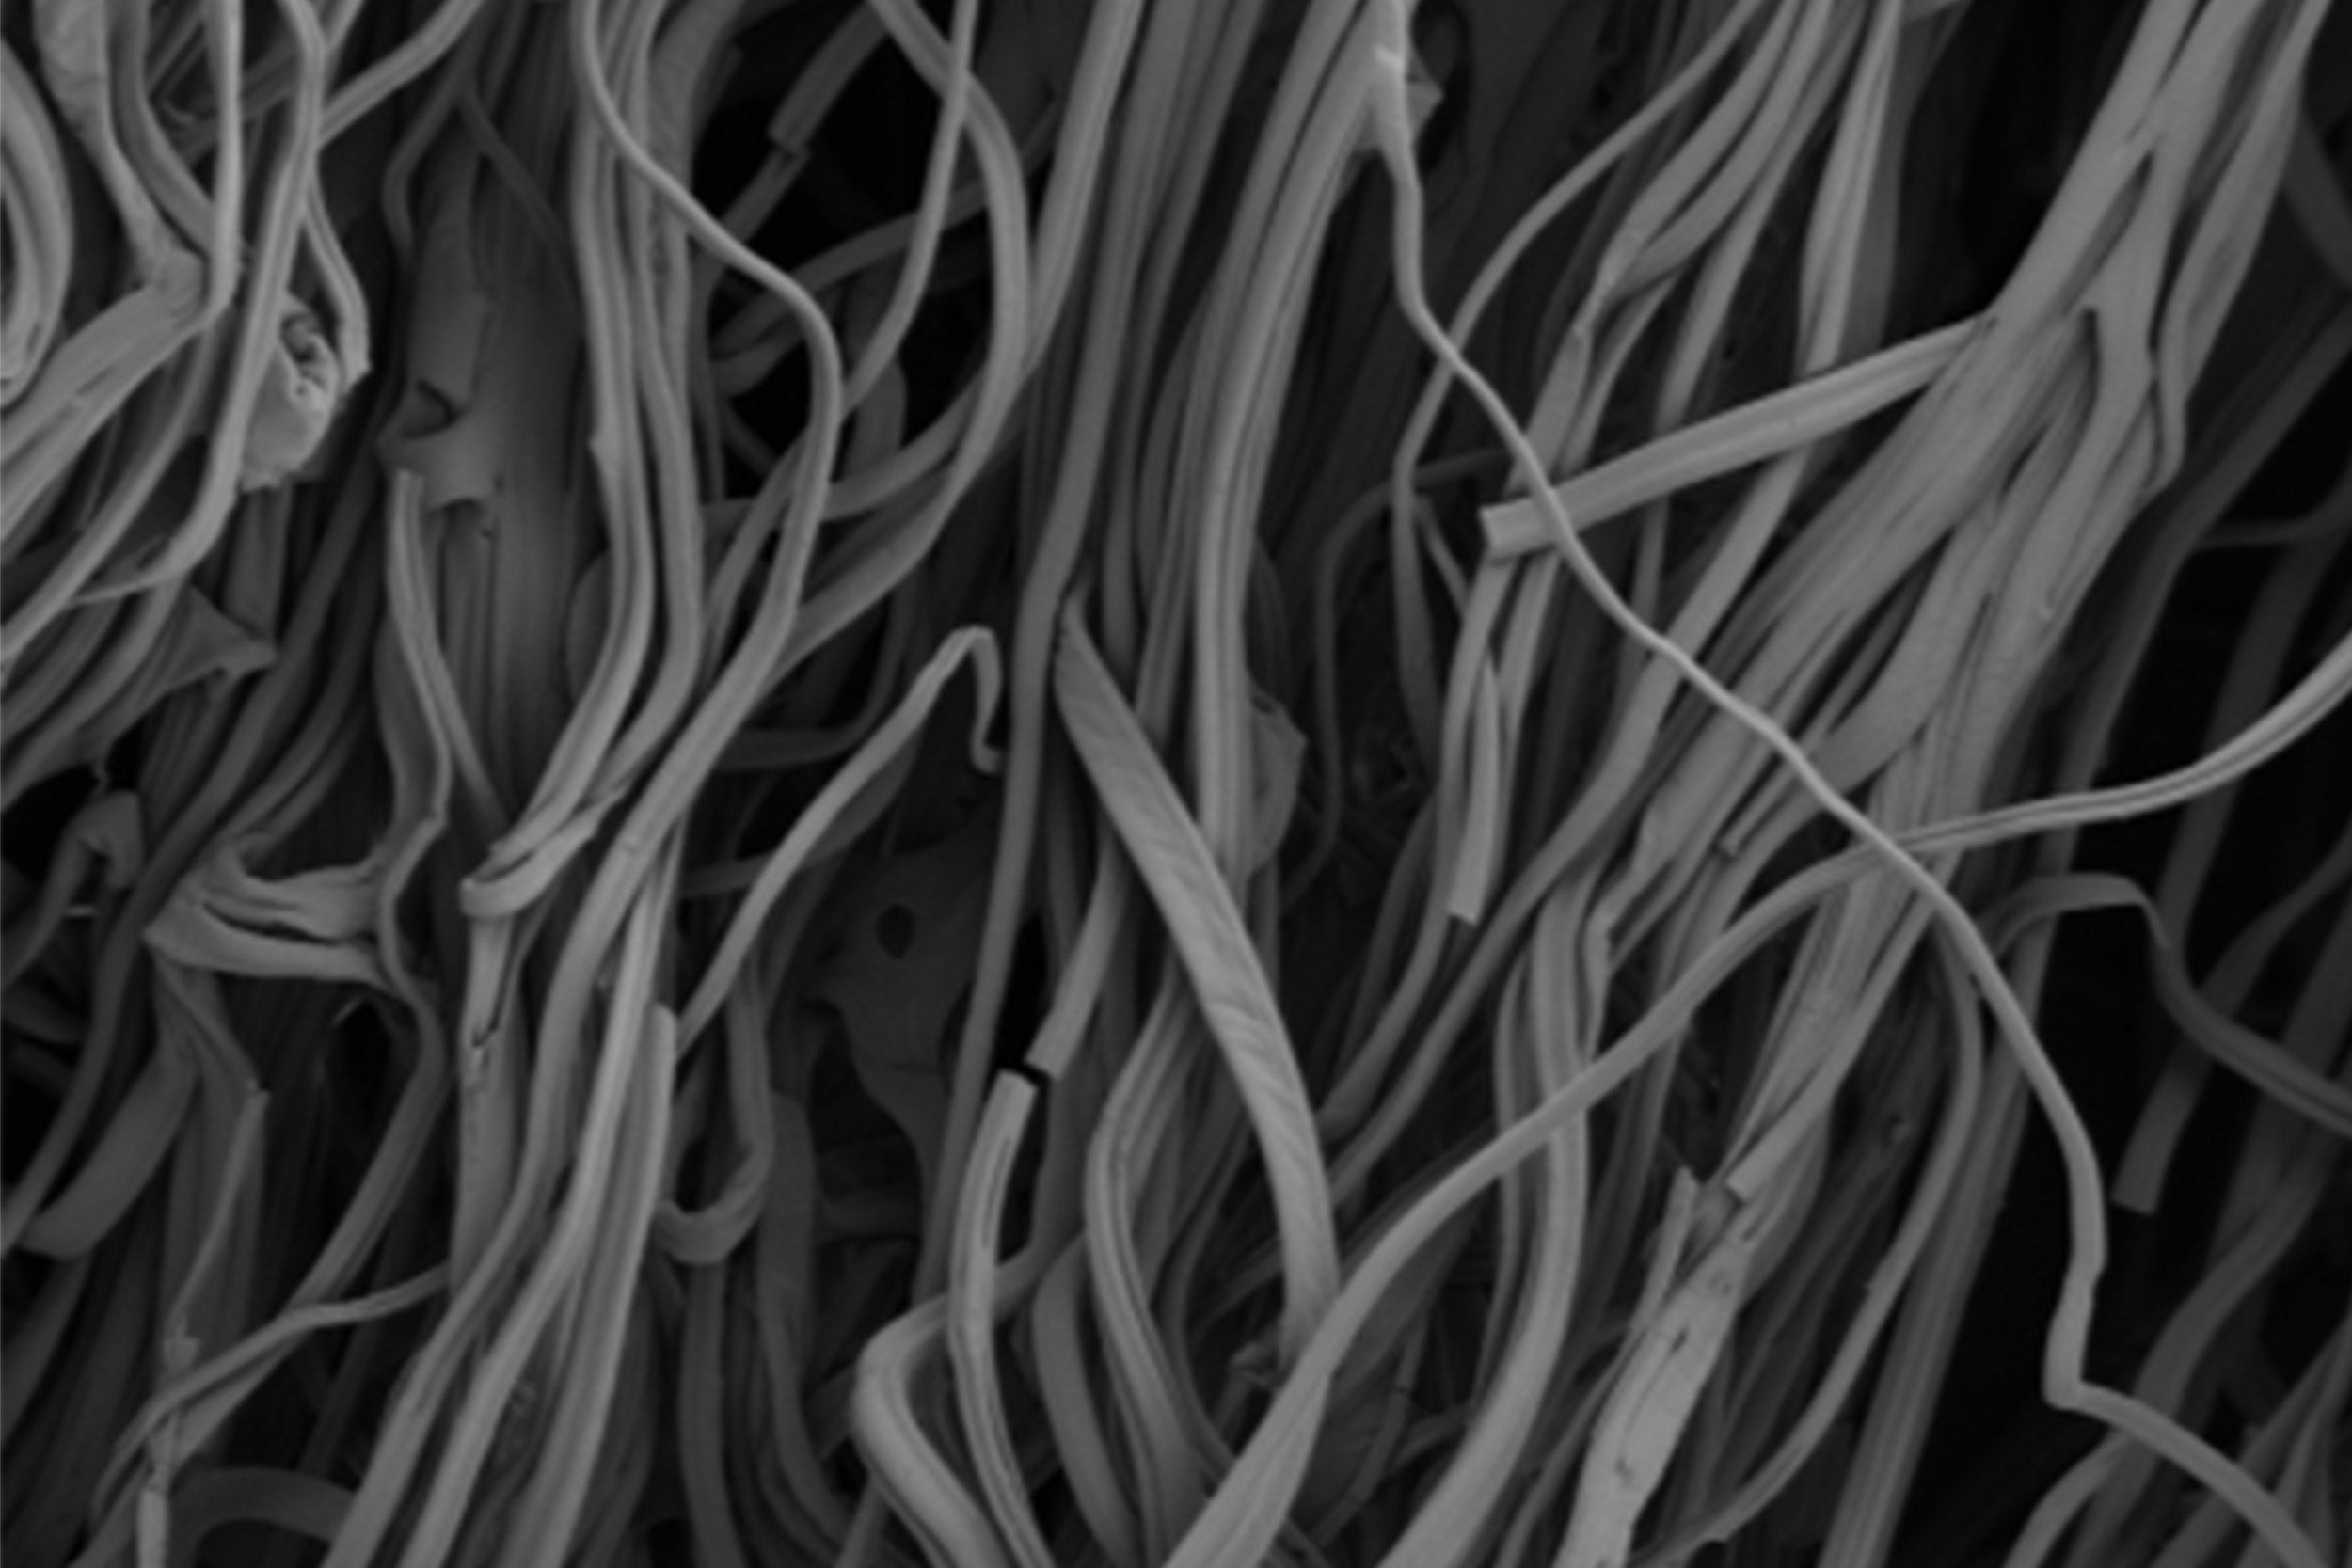 Images of gelatin fibers taken by scanning electron microscopy.